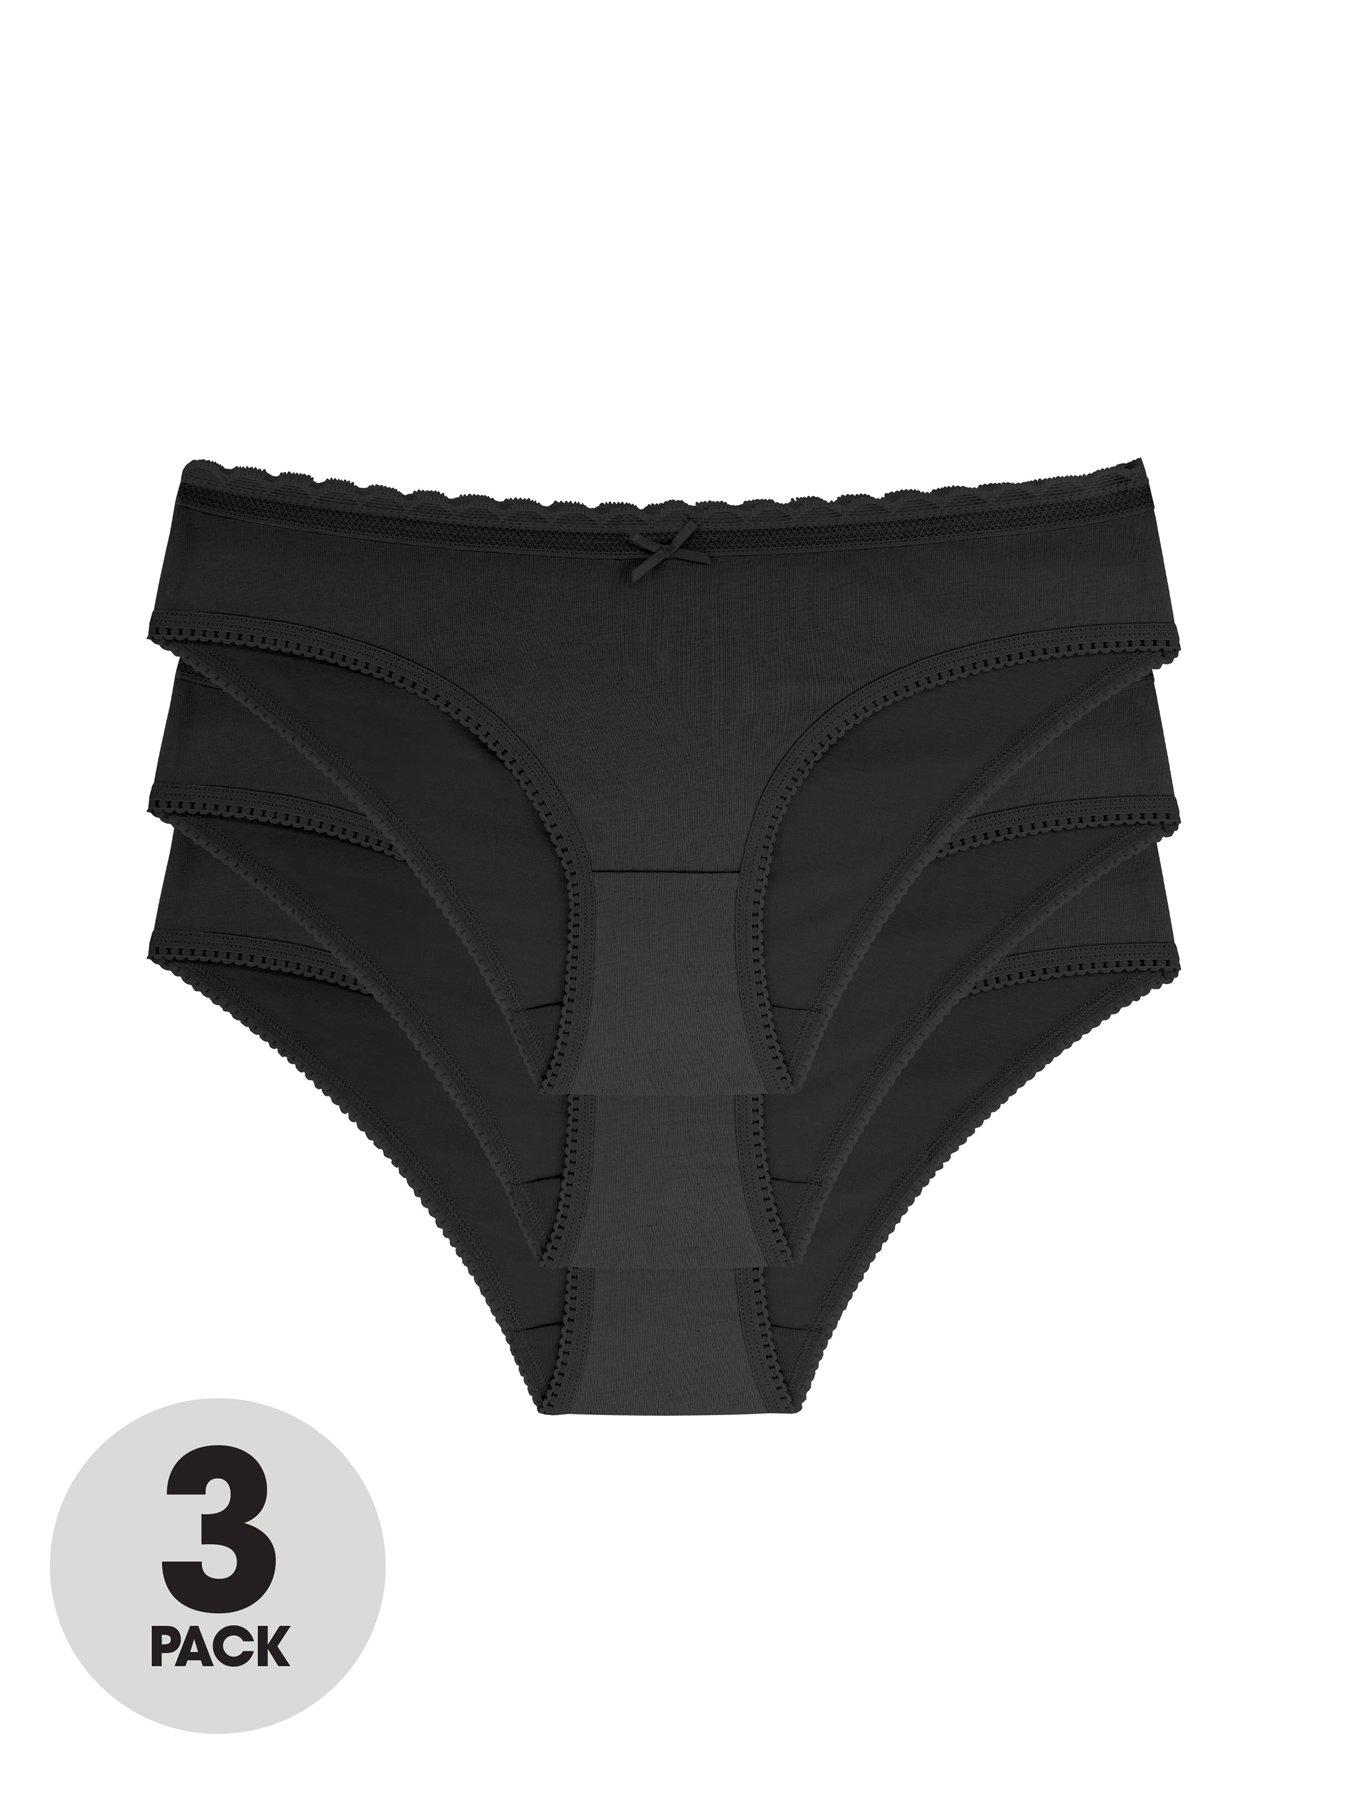 Dorina Women's Rosanne 5 Pack Seamless Soft Touch Fabric Brief Panties